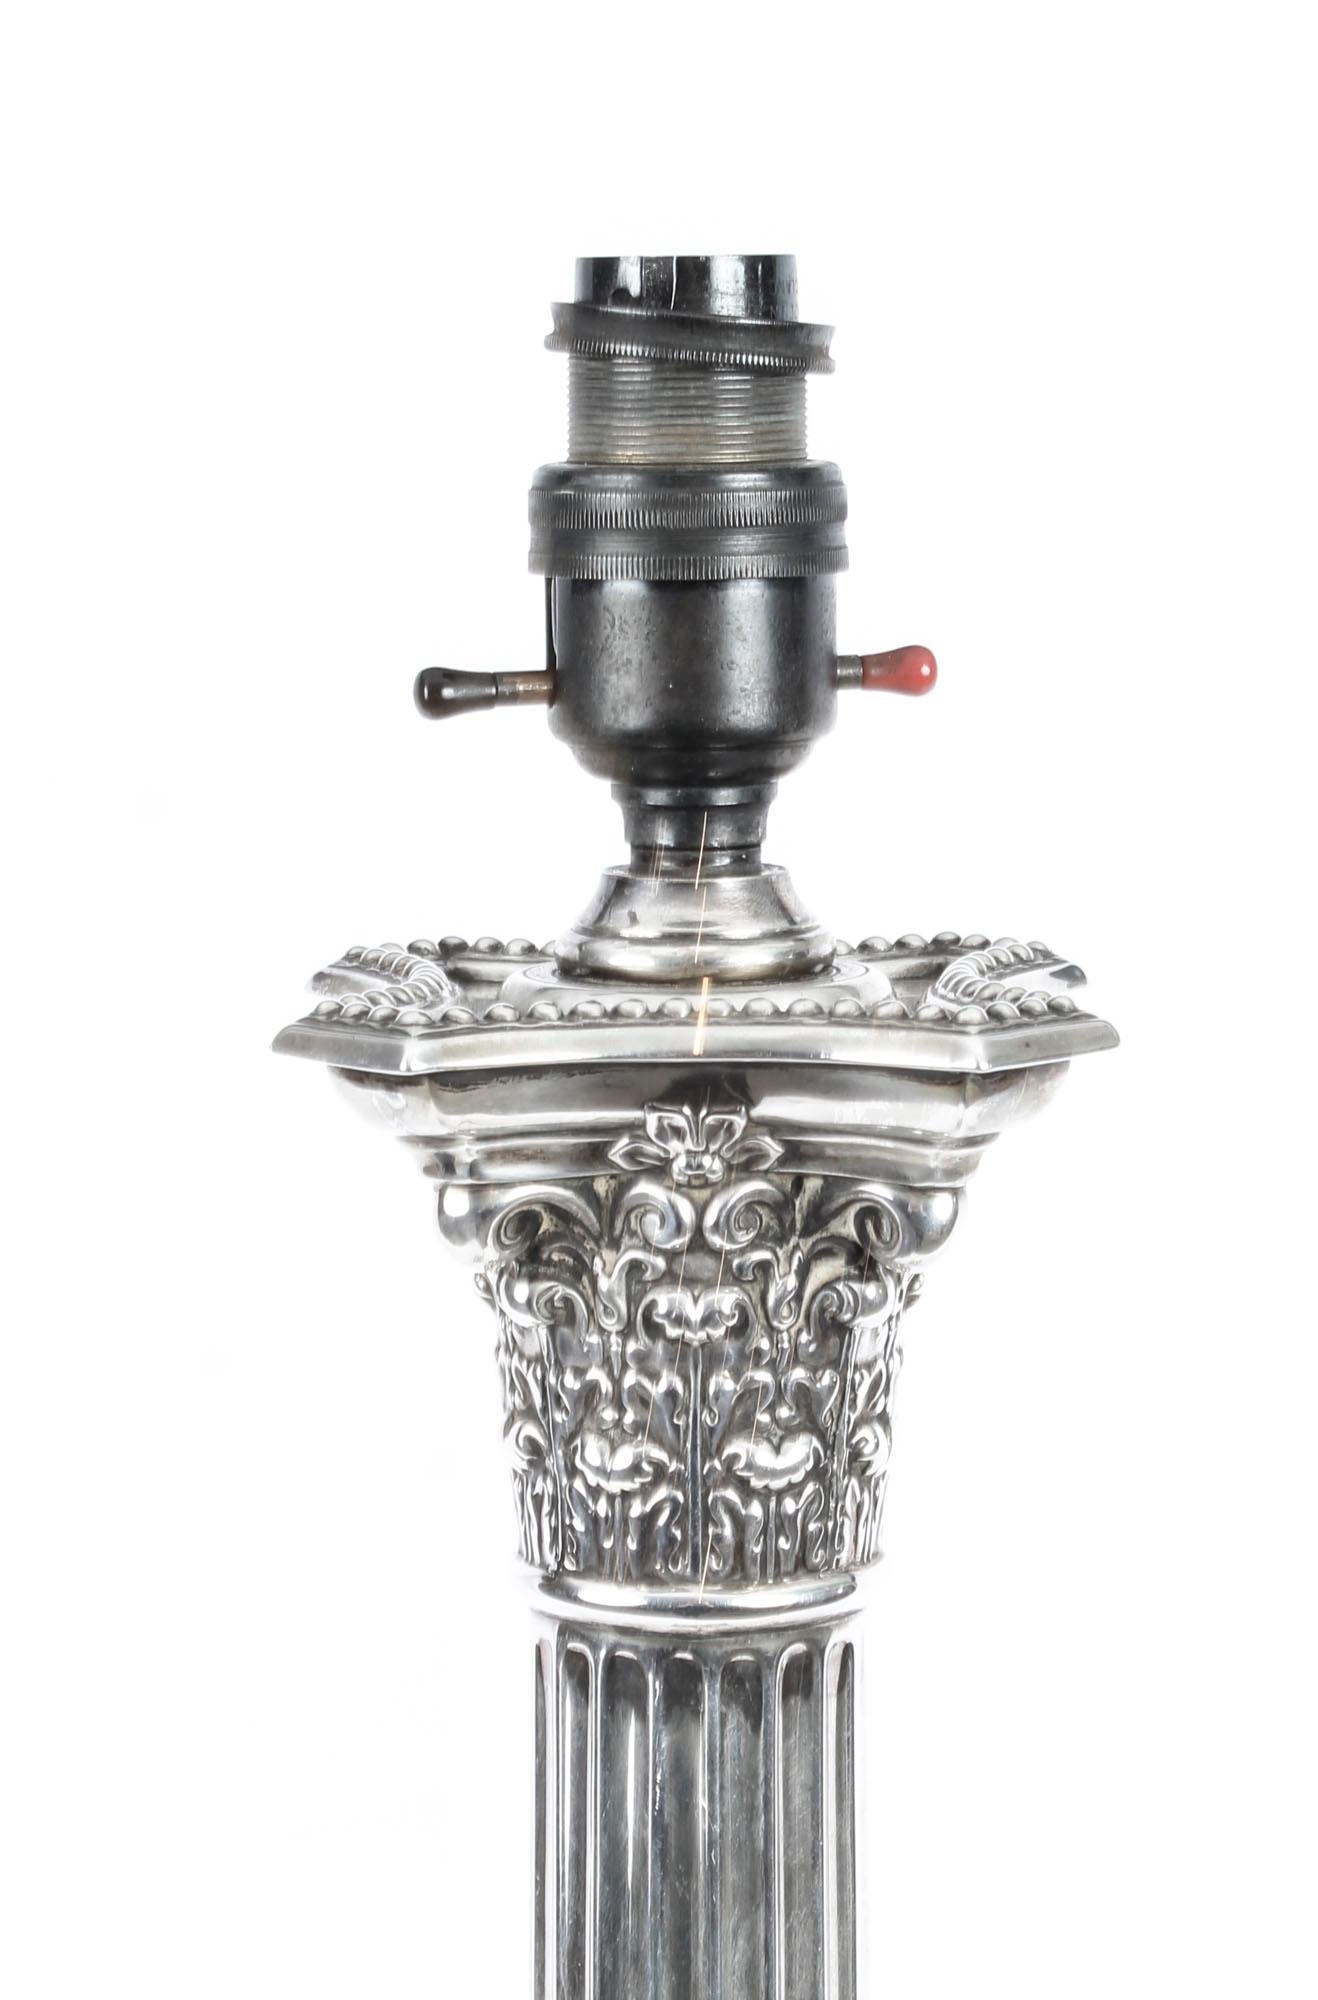 Antike Edwardian Sterling Silber korinthische Säule Tischlampe datiert 1914 (Sterlingsilber)